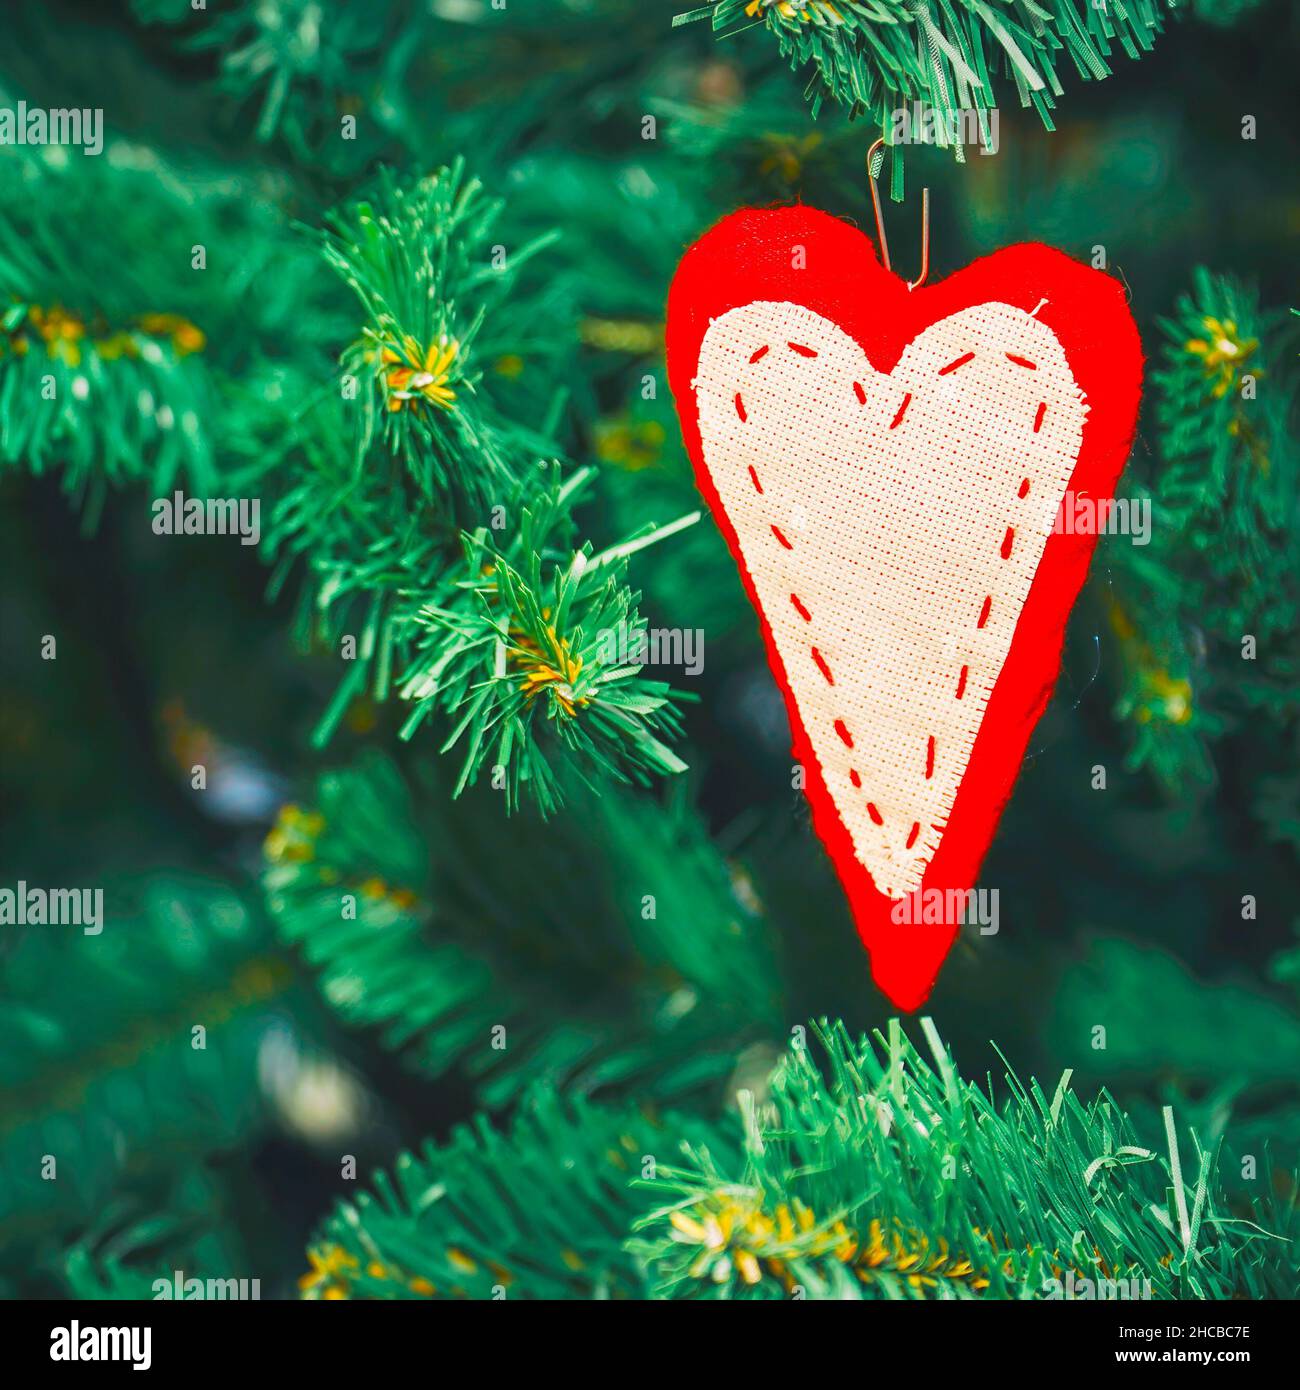 Homemade heart sign on Christmas tree Stock Photo